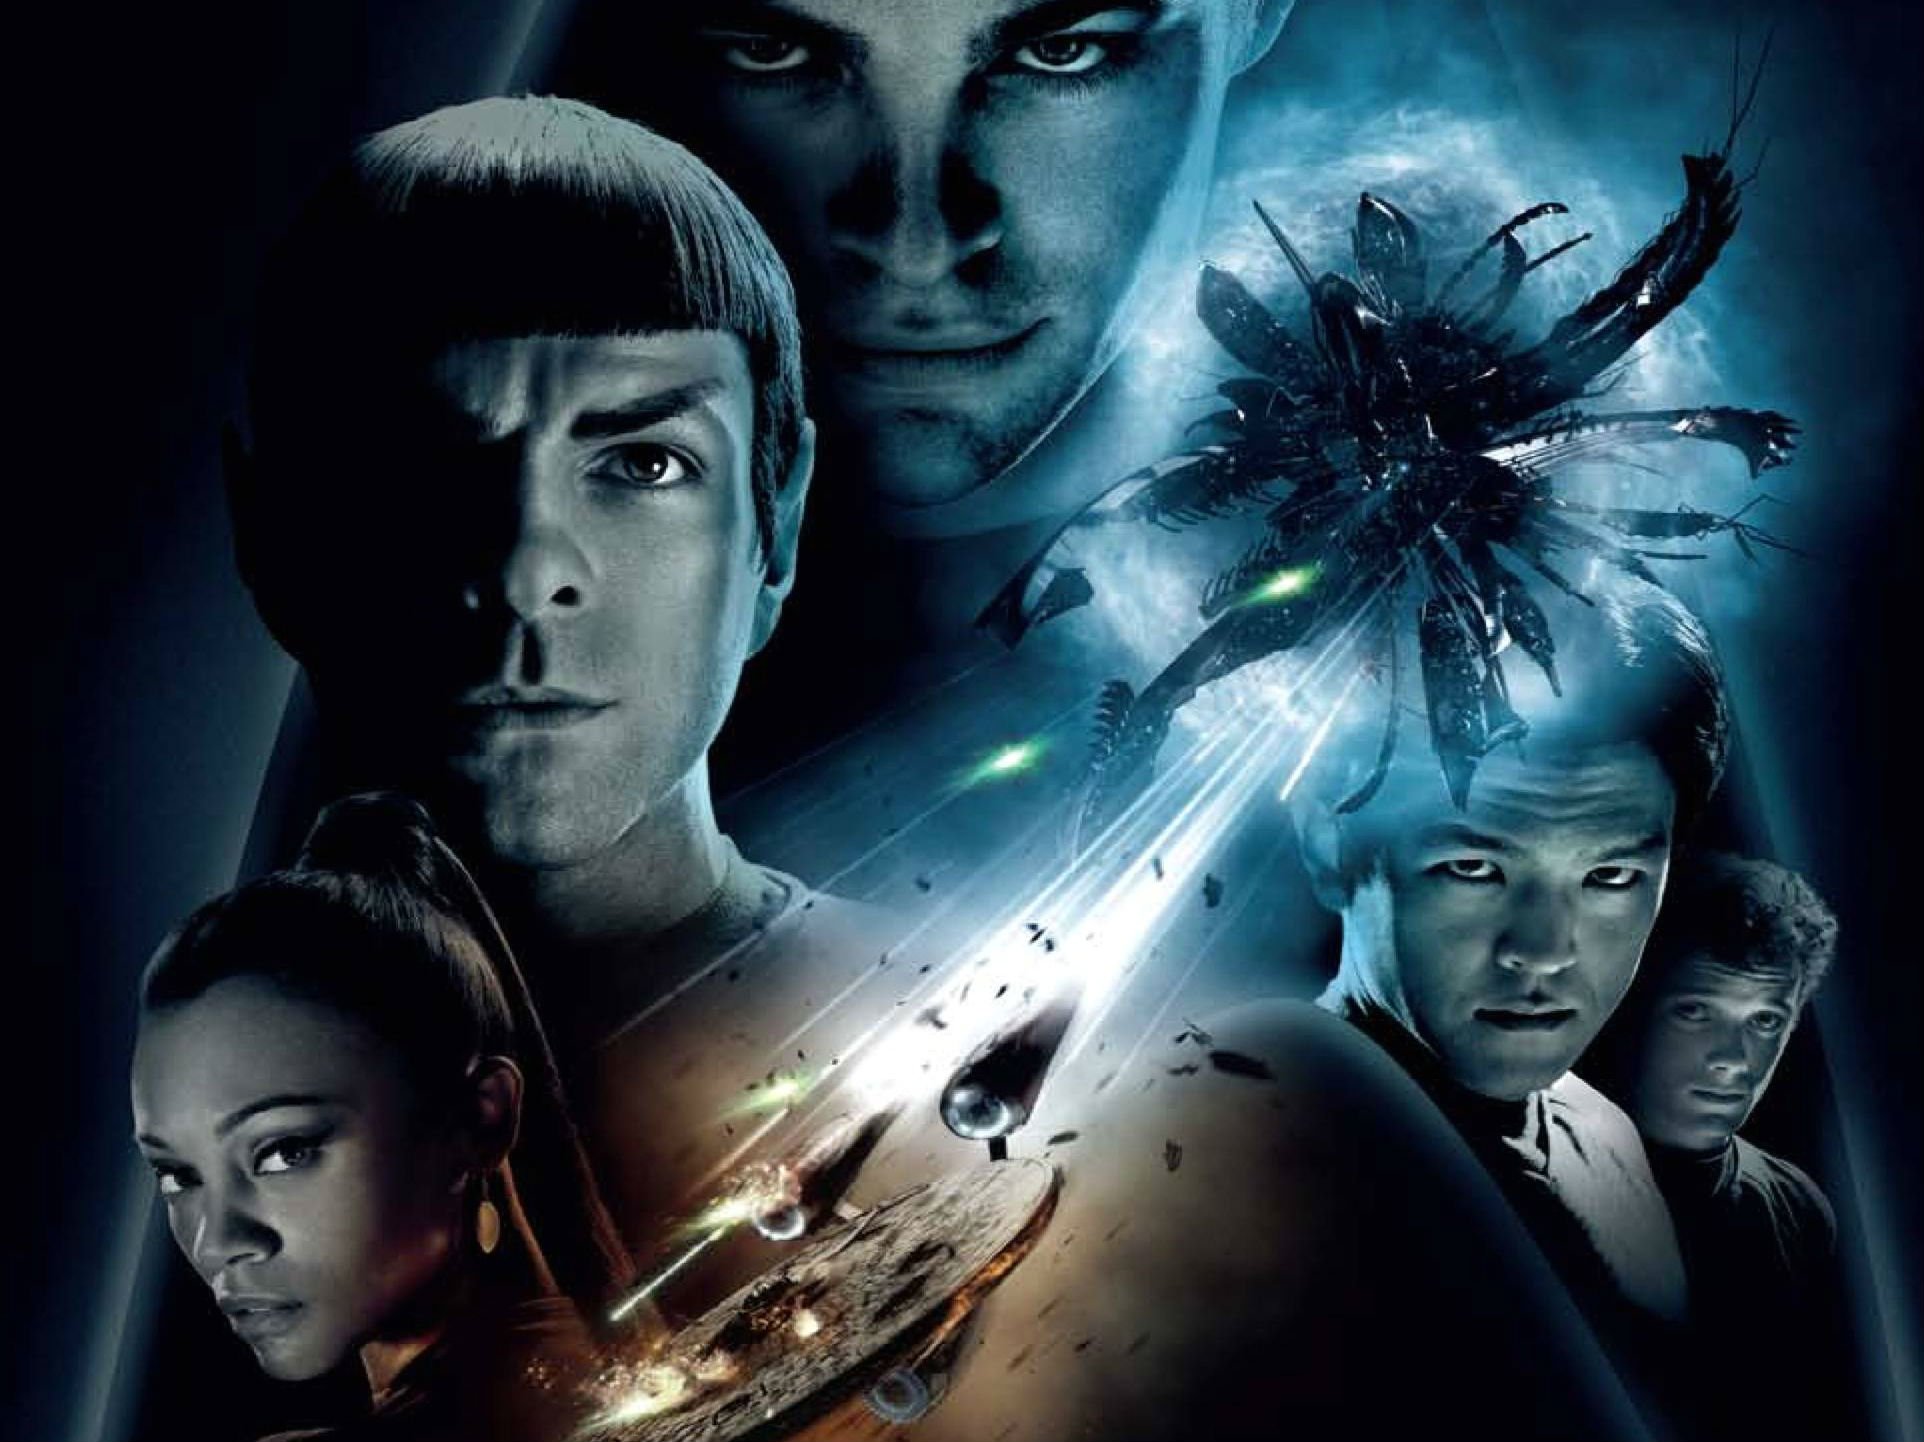 star, Trek, Sci fi, Action, Futuristic, Disney, Space, Spaceship Wallpaper